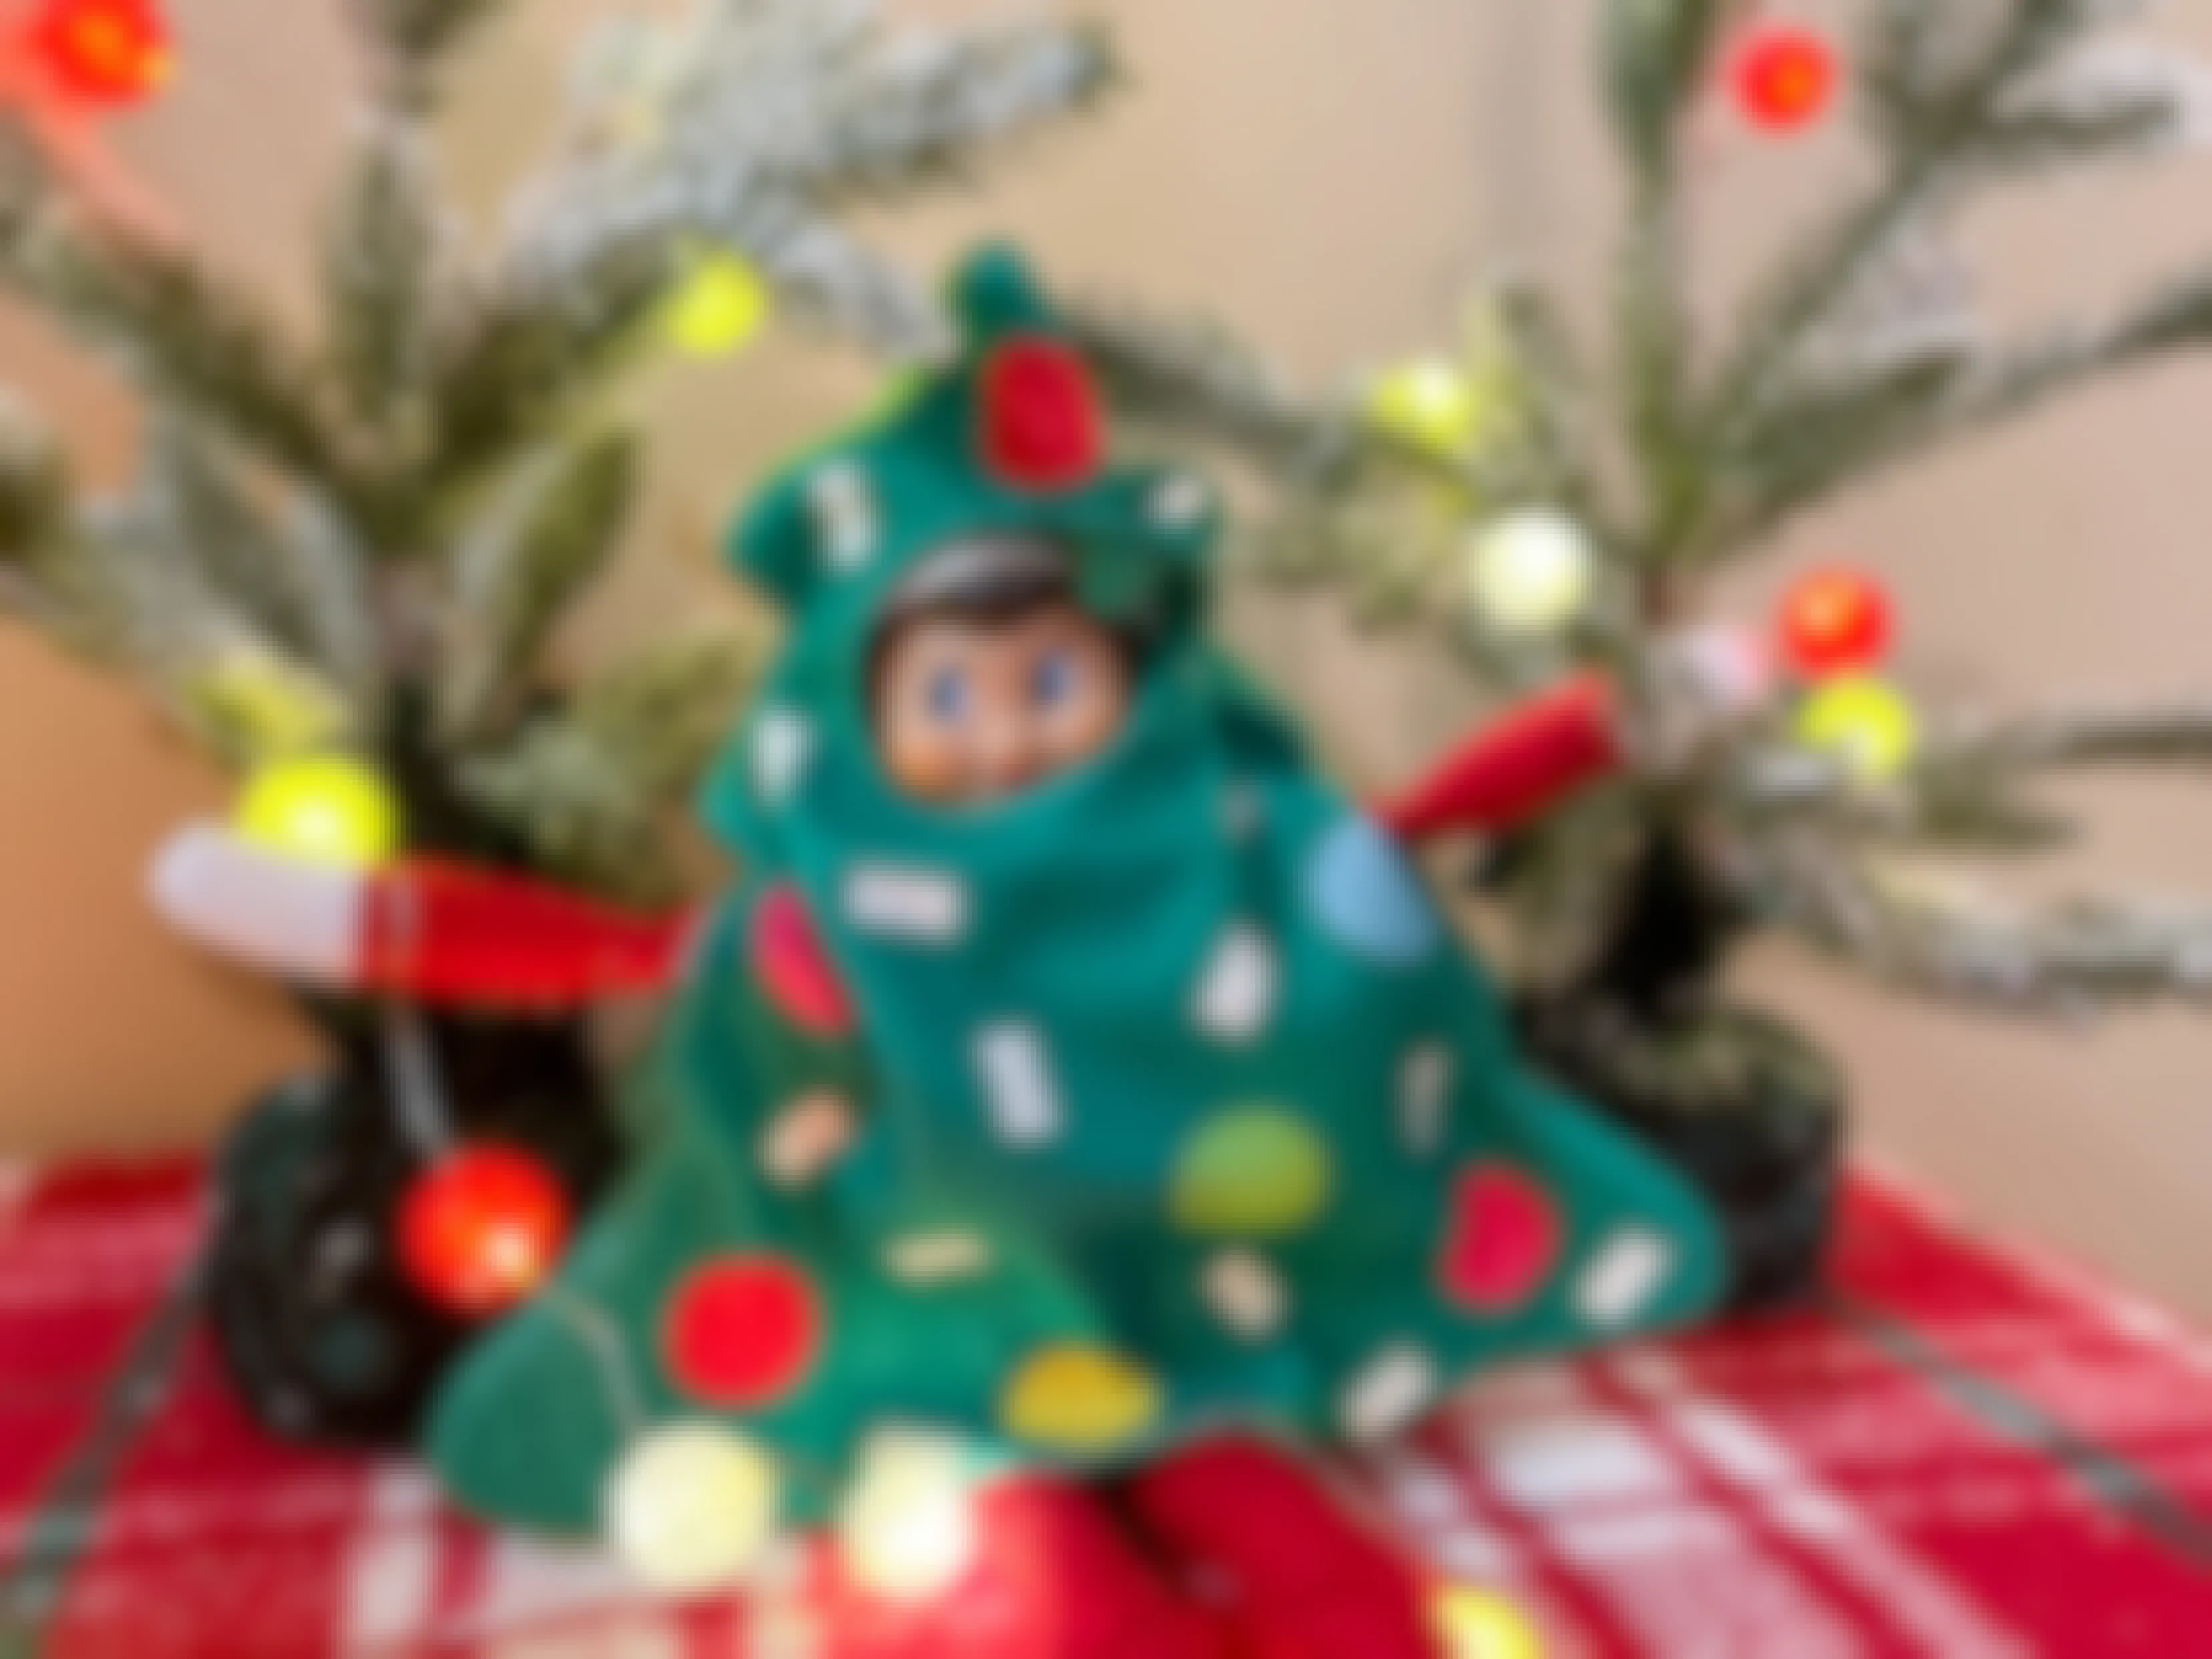 elf on the shelf doll in tree costume